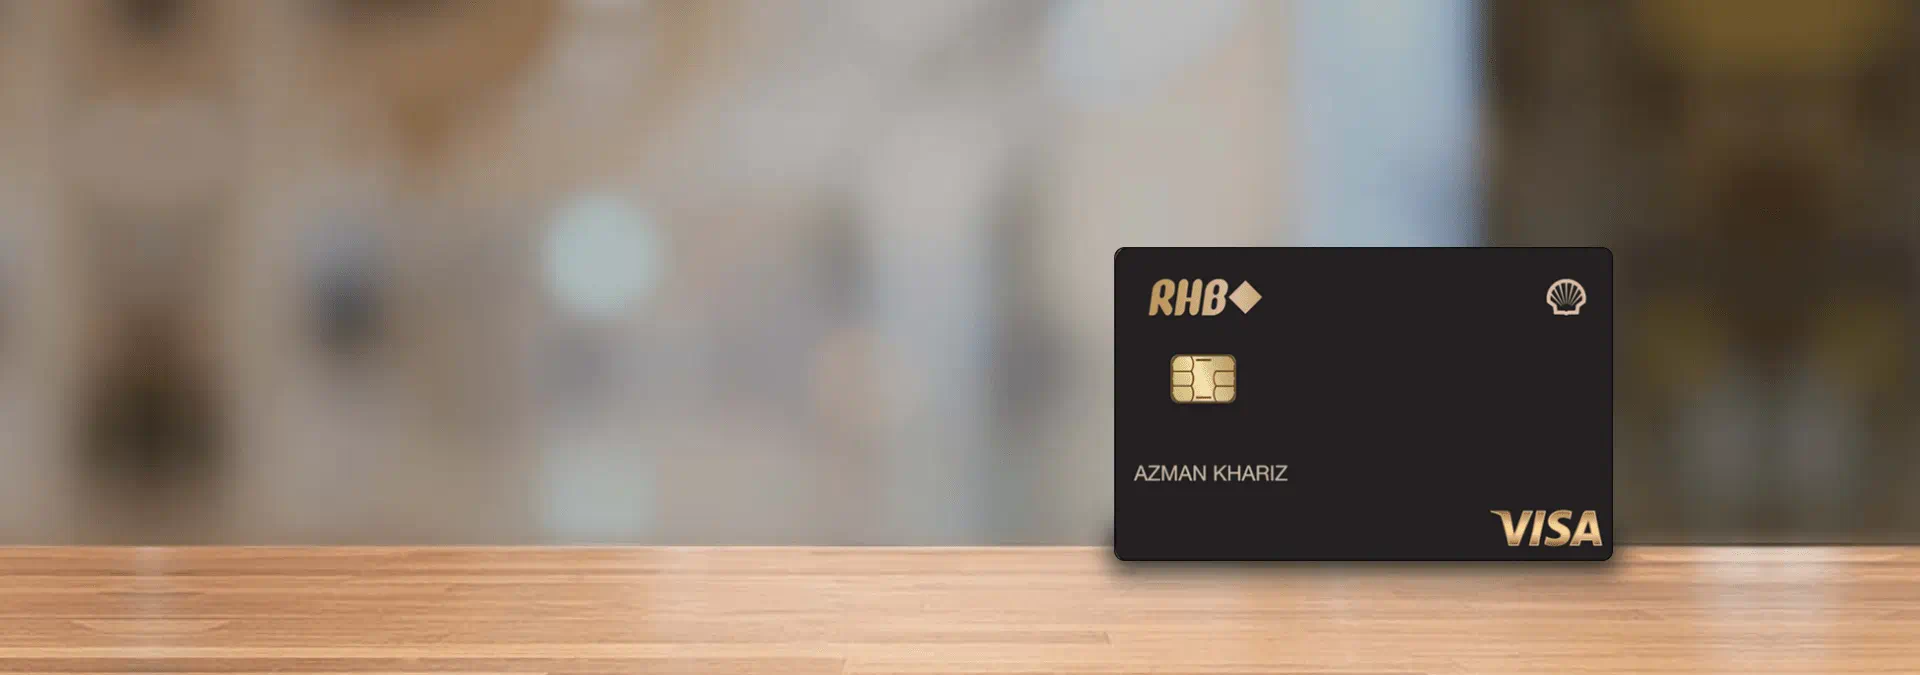 rhb-shell-visa-credit-card-banner